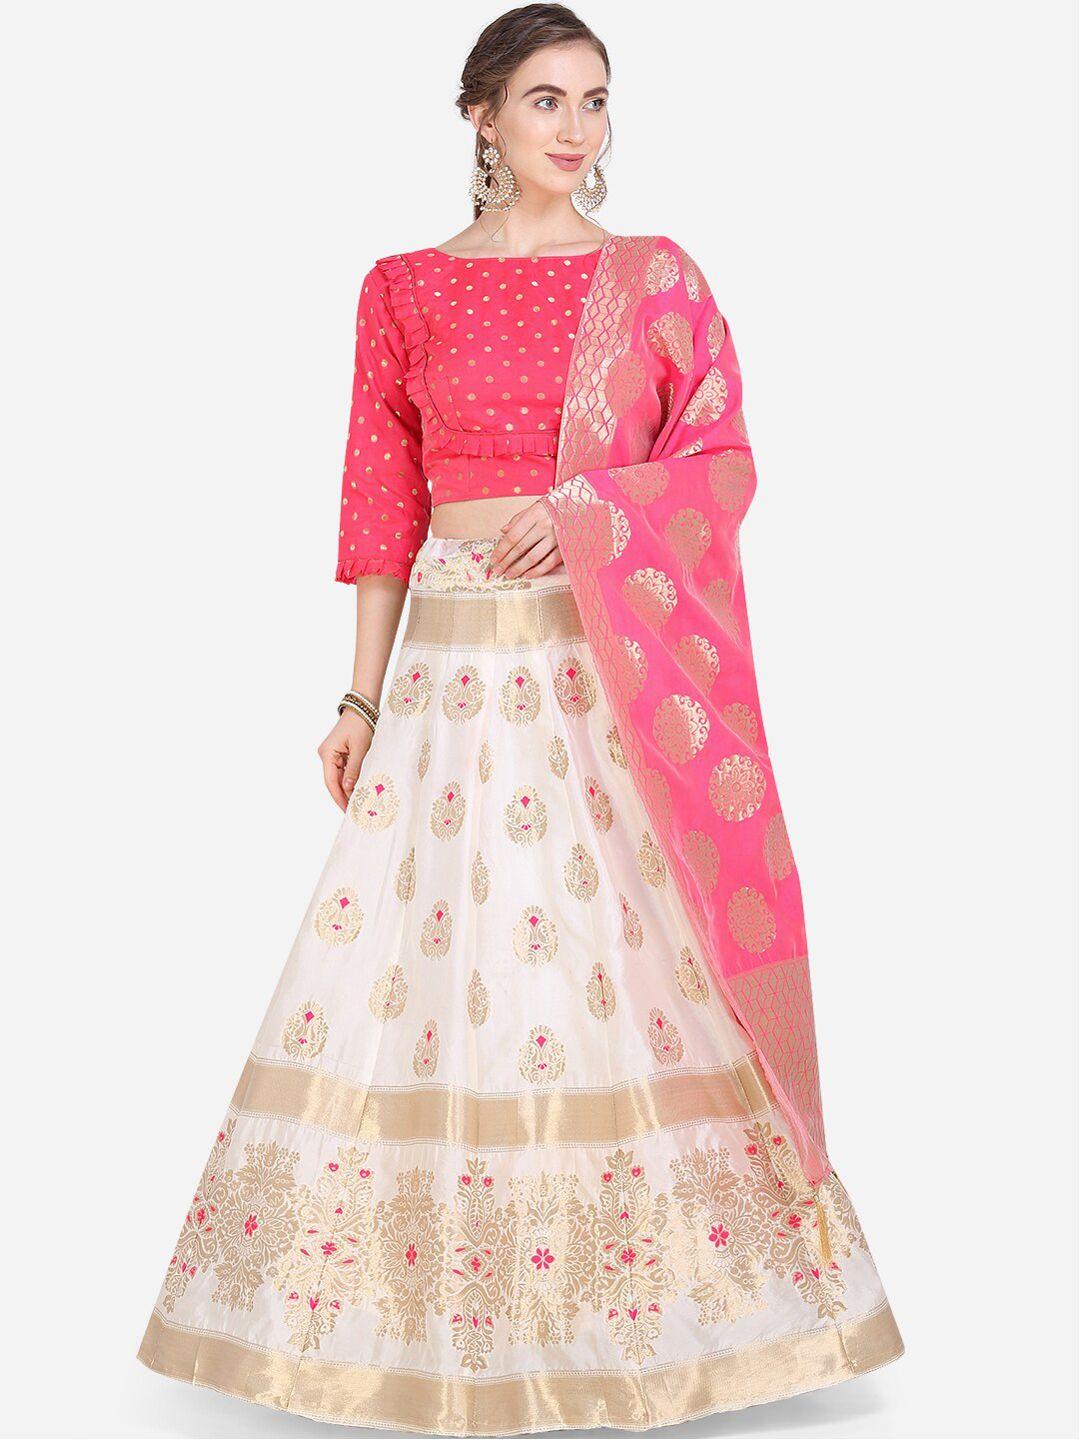 PURVAJA White & Pink Woven Design Semi-Stitched Lehenga & Unstitched Blouse with Dupatta